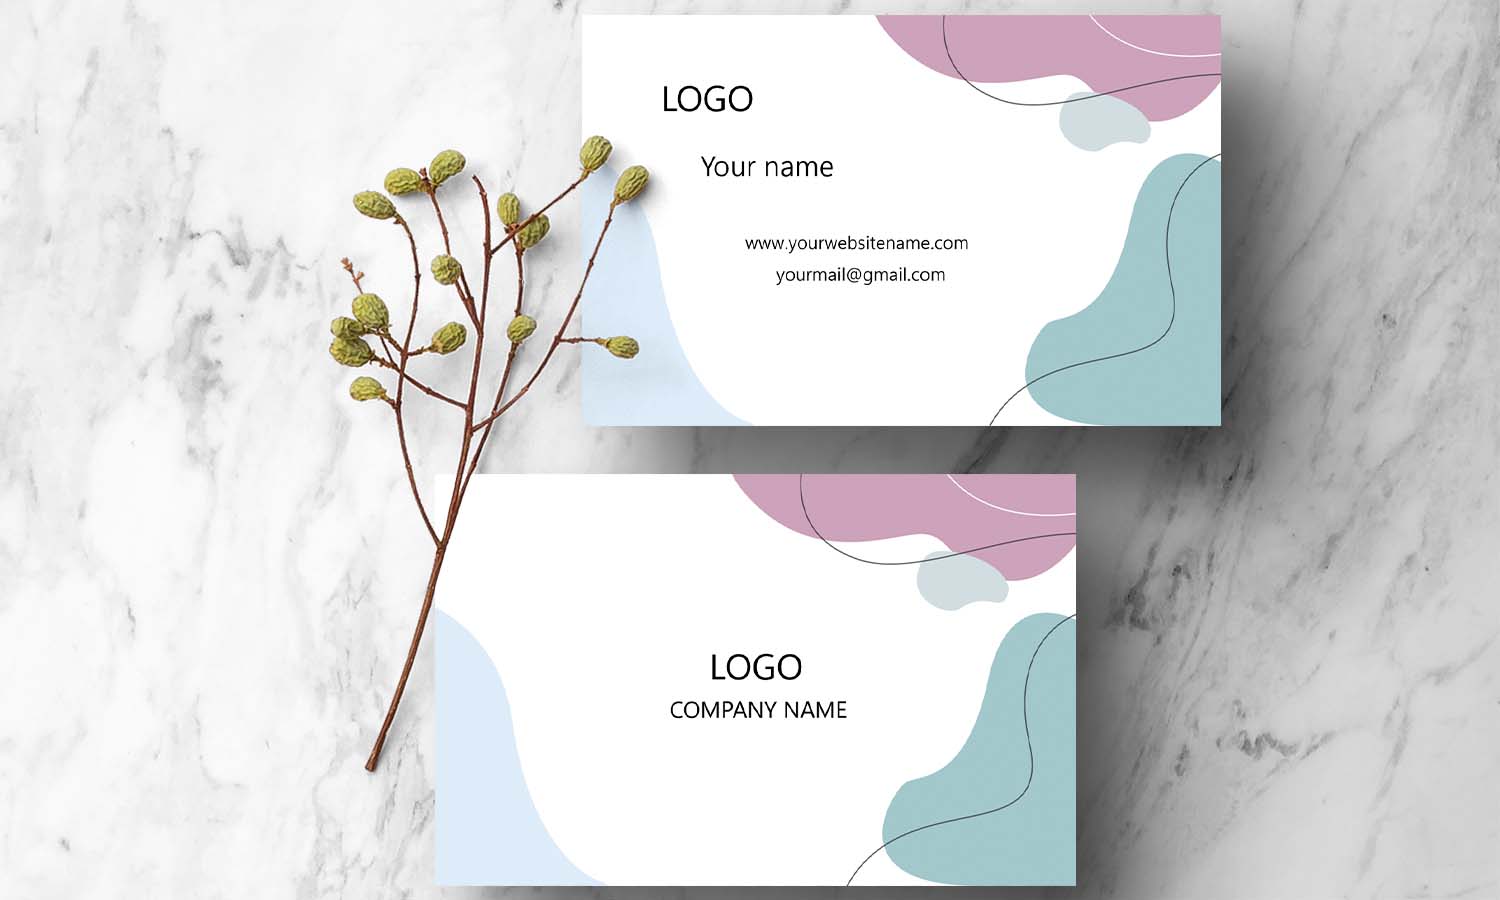 I will do minimalist business card design.